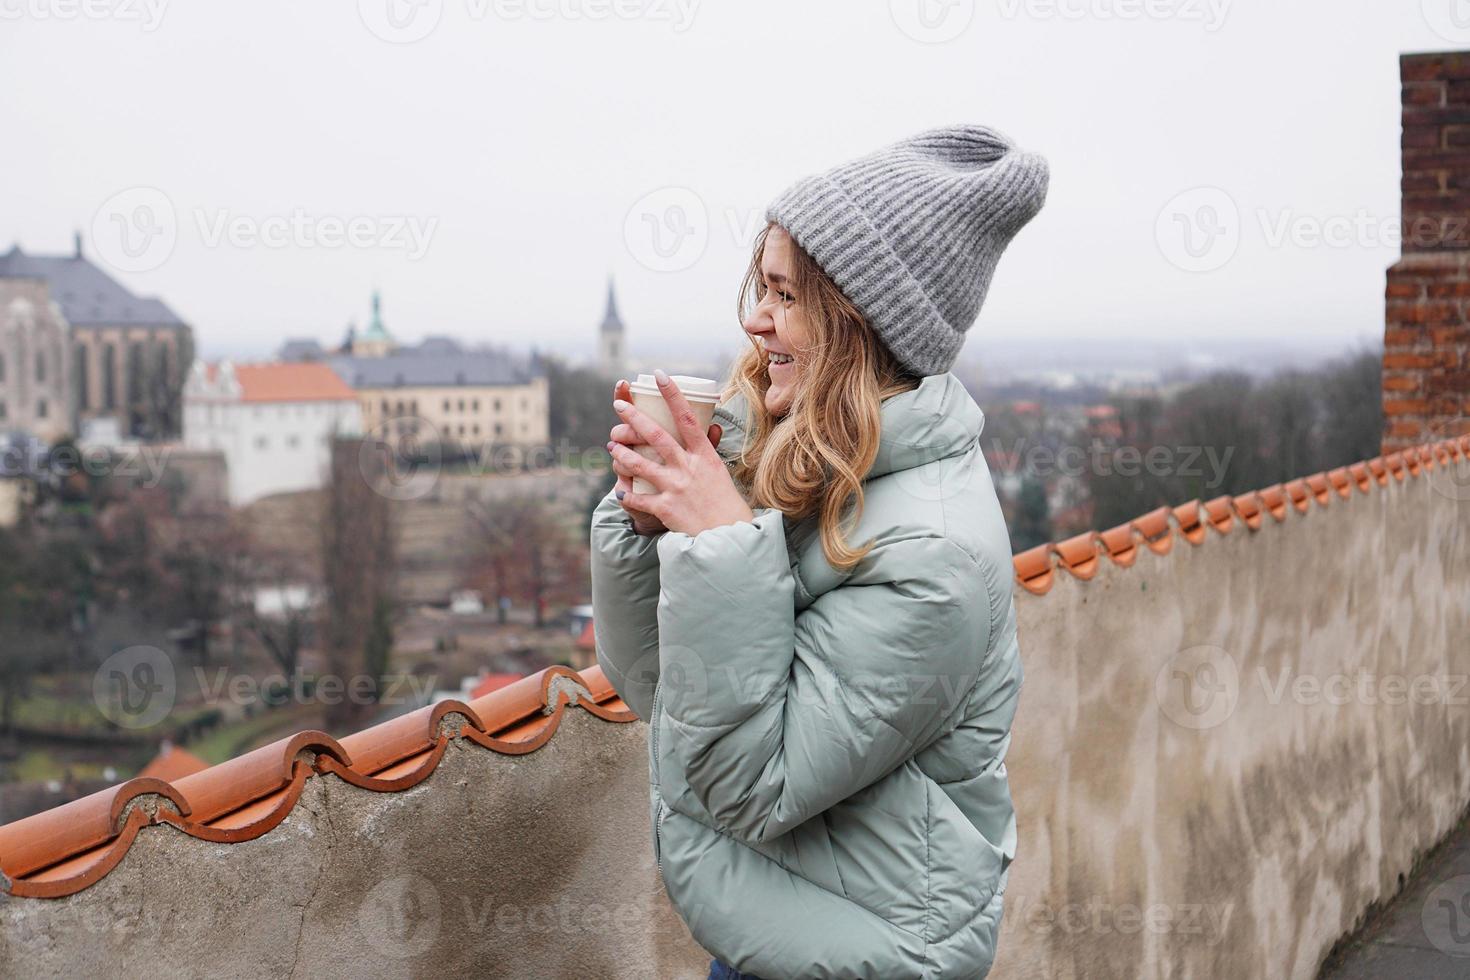 turista feminina no contexto da cidade checa foto